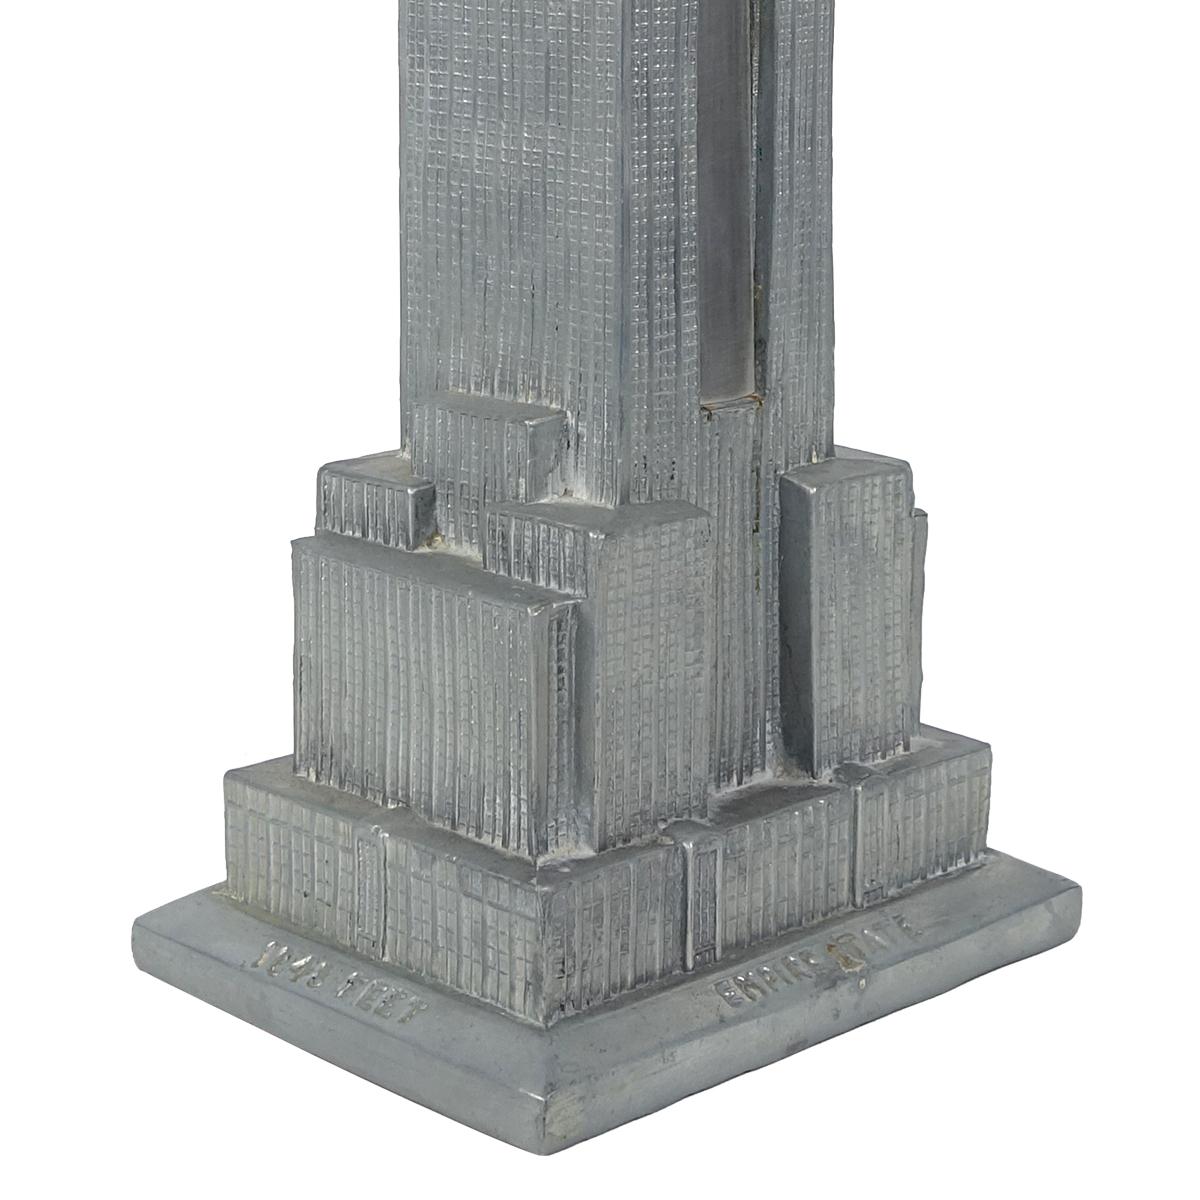 Table Lamp by Sarsaparilla Deco Designs Model of Empire State Building For Sale 1